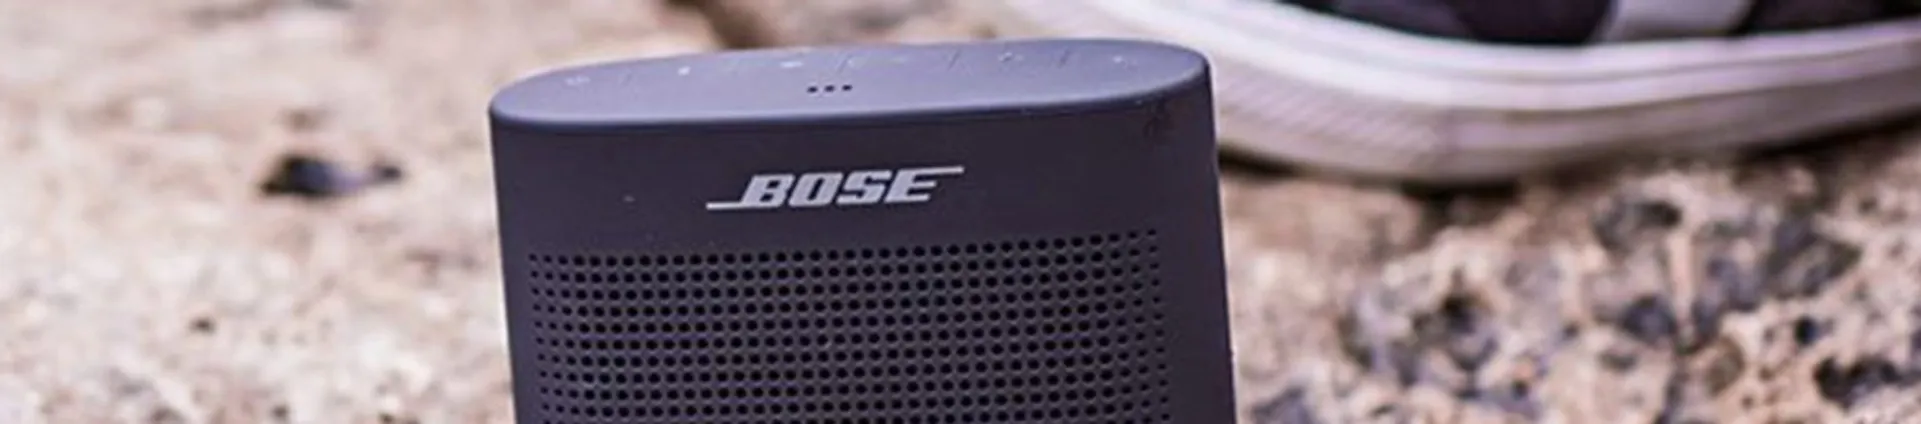 Black Friday Bose speakers